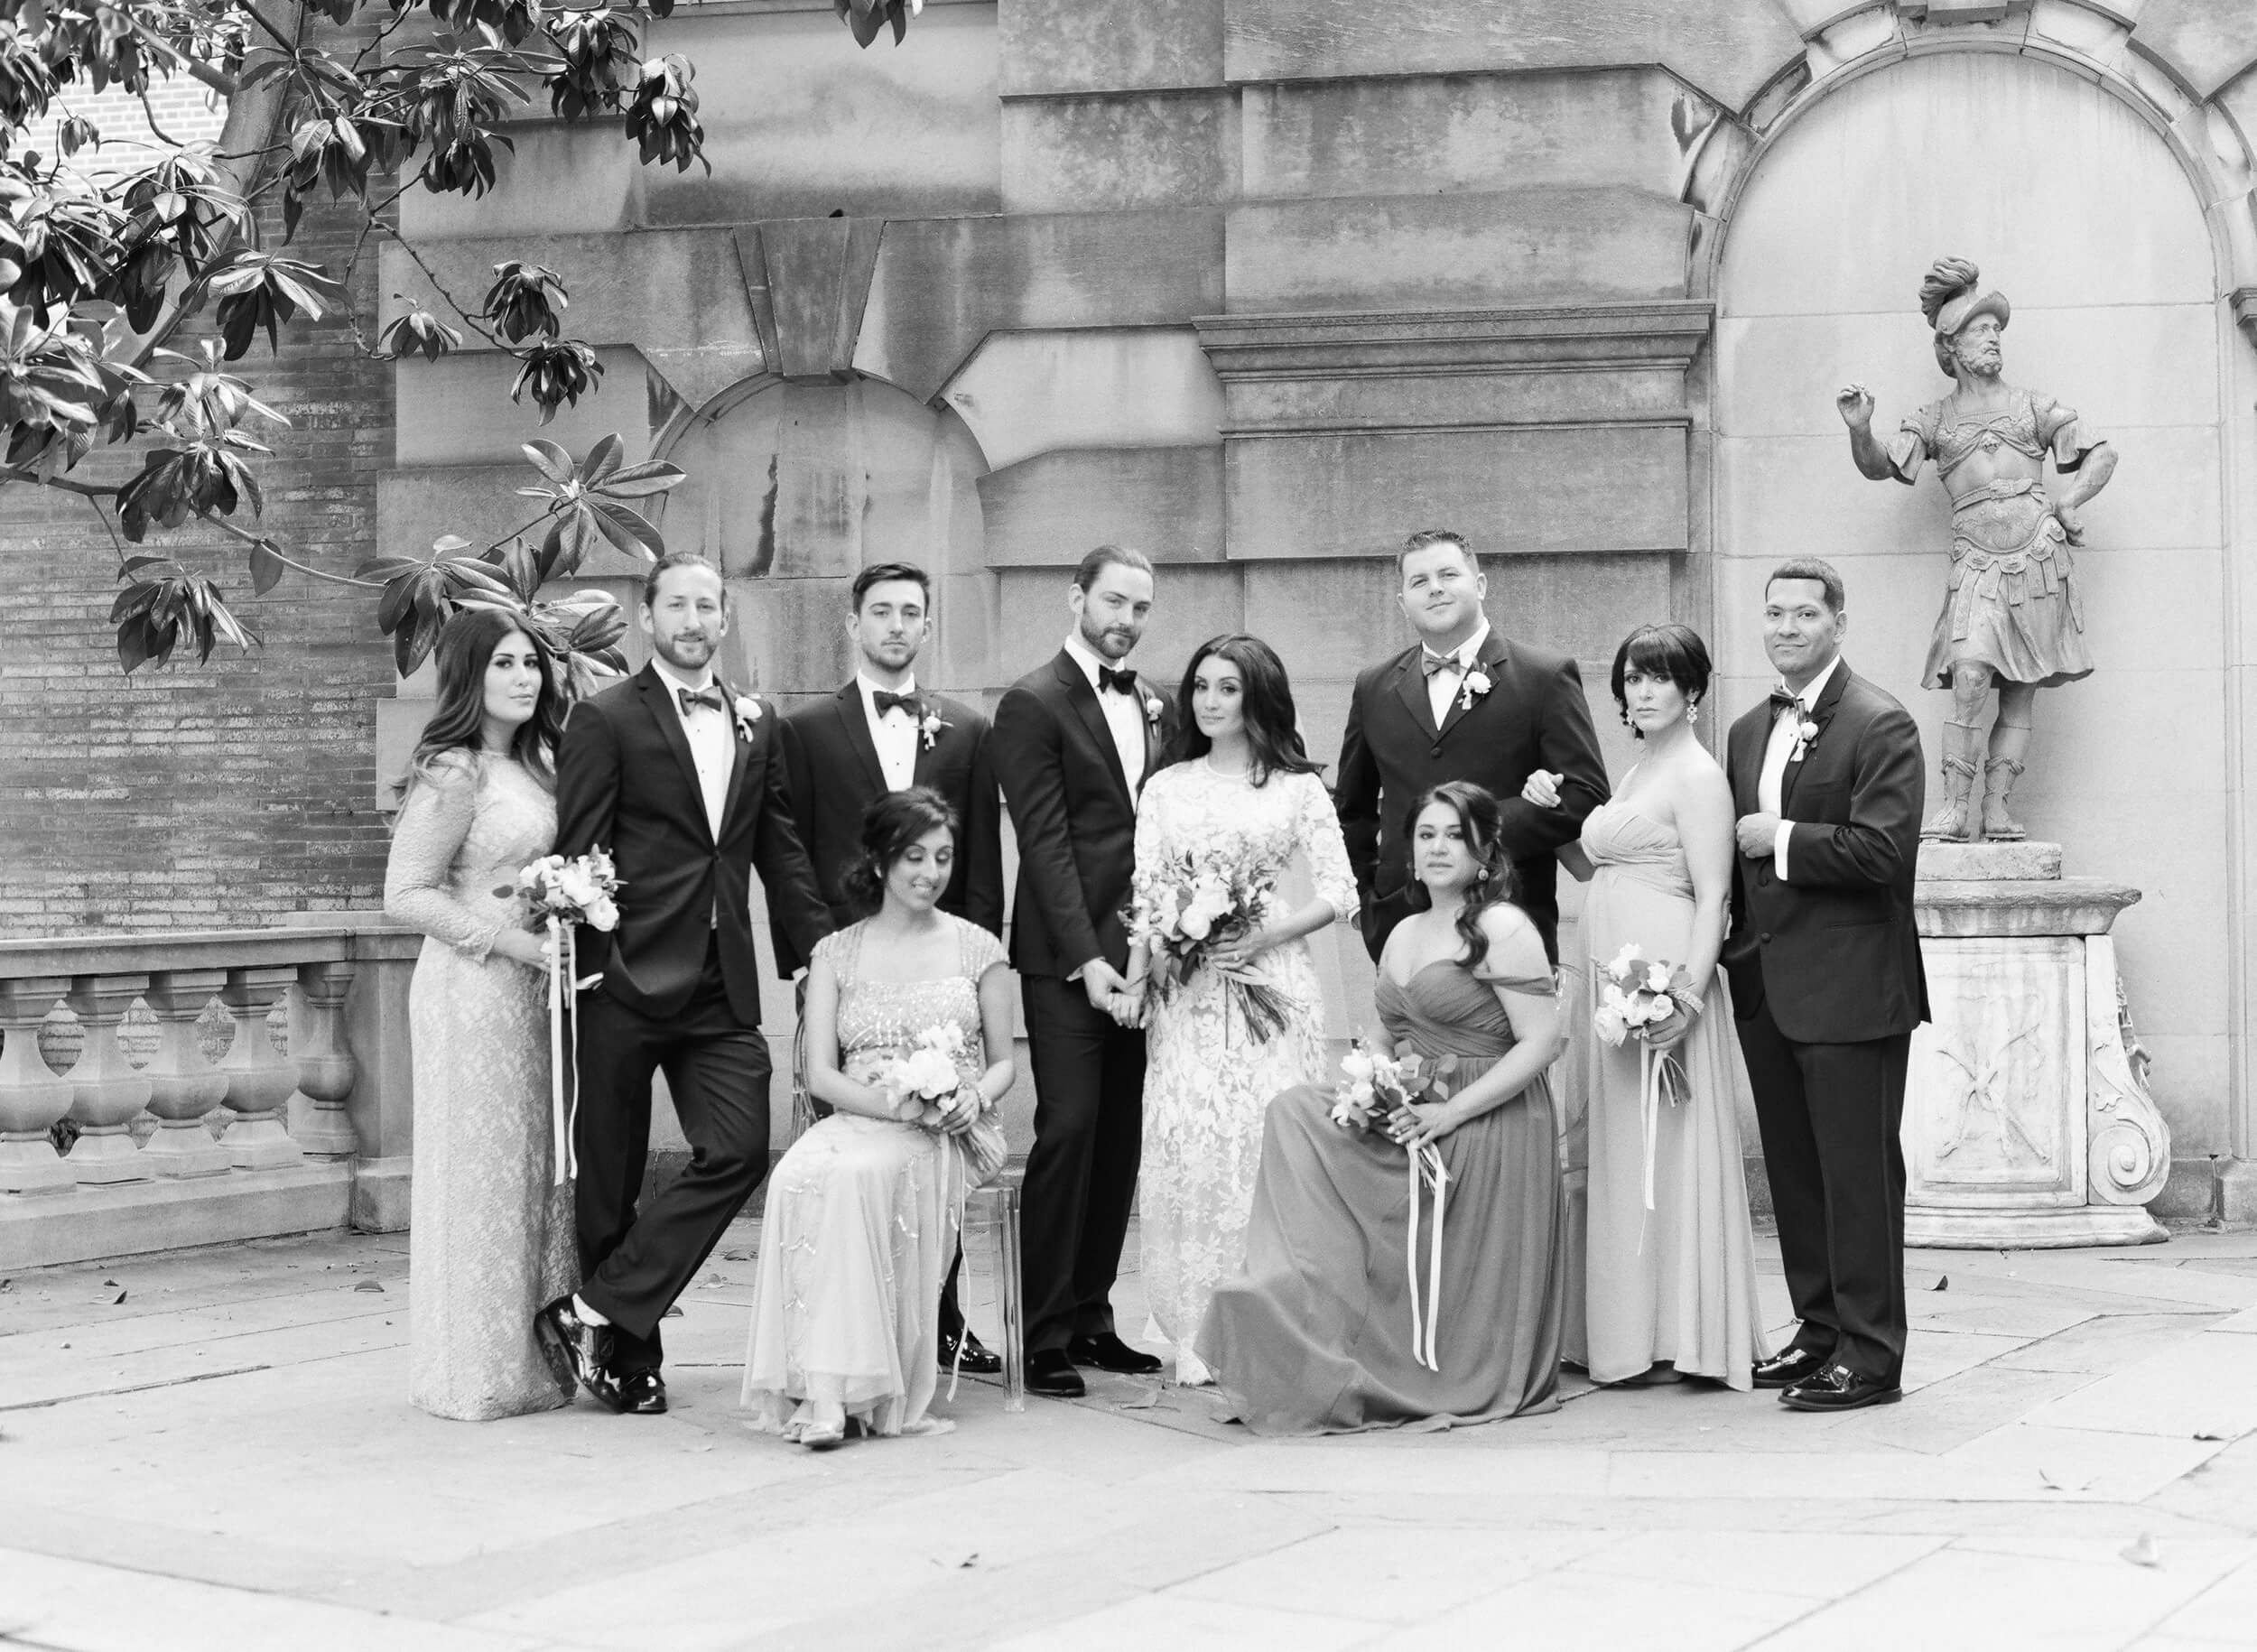 family portrait at wedding in Washington, D.C.